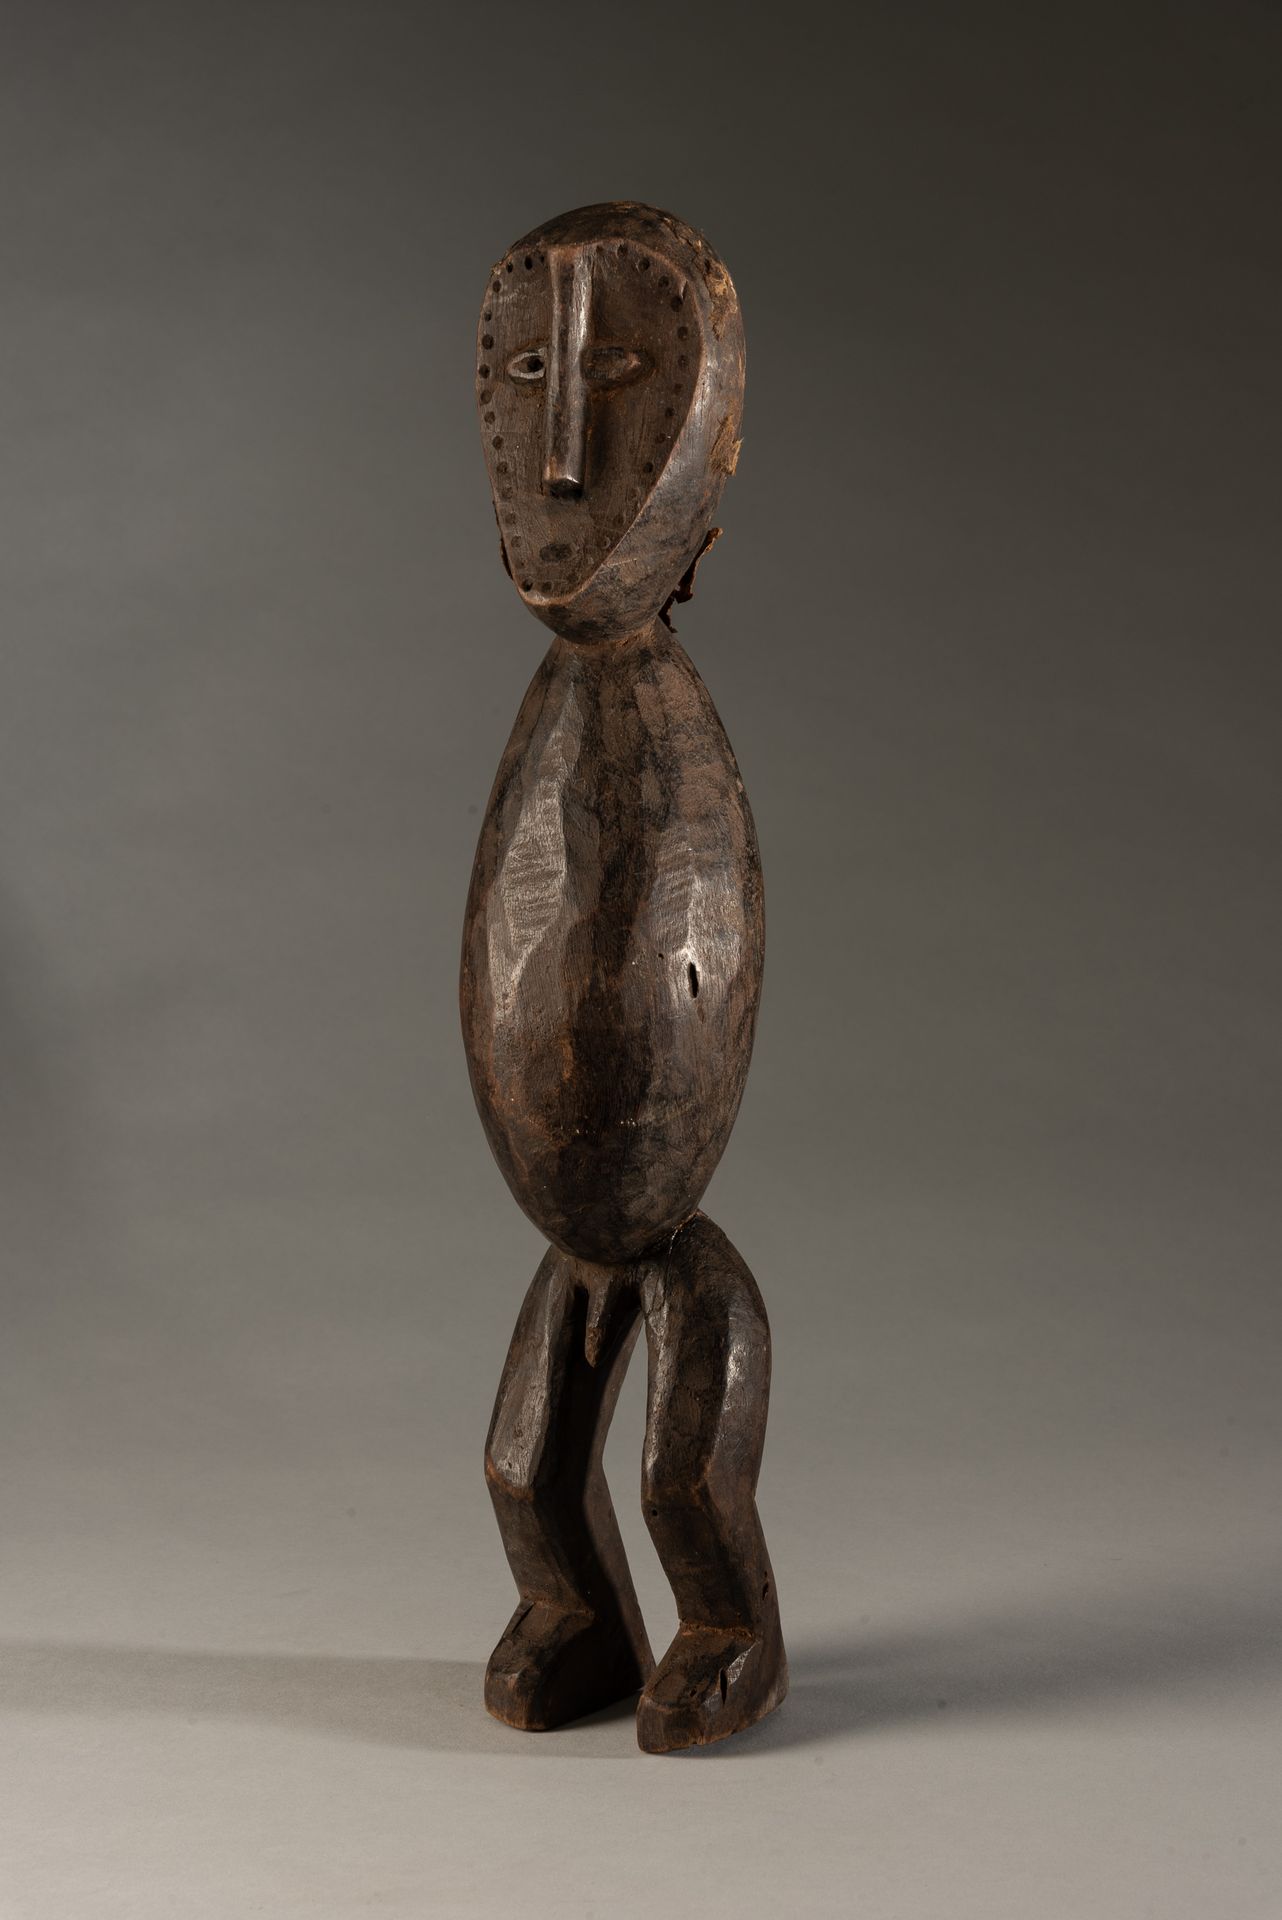 Peuple lega 戴着面具的抽象男性雕像Lega，刚果民主共和国 - 20世纪中期 - 42 x 8 x 8厘米